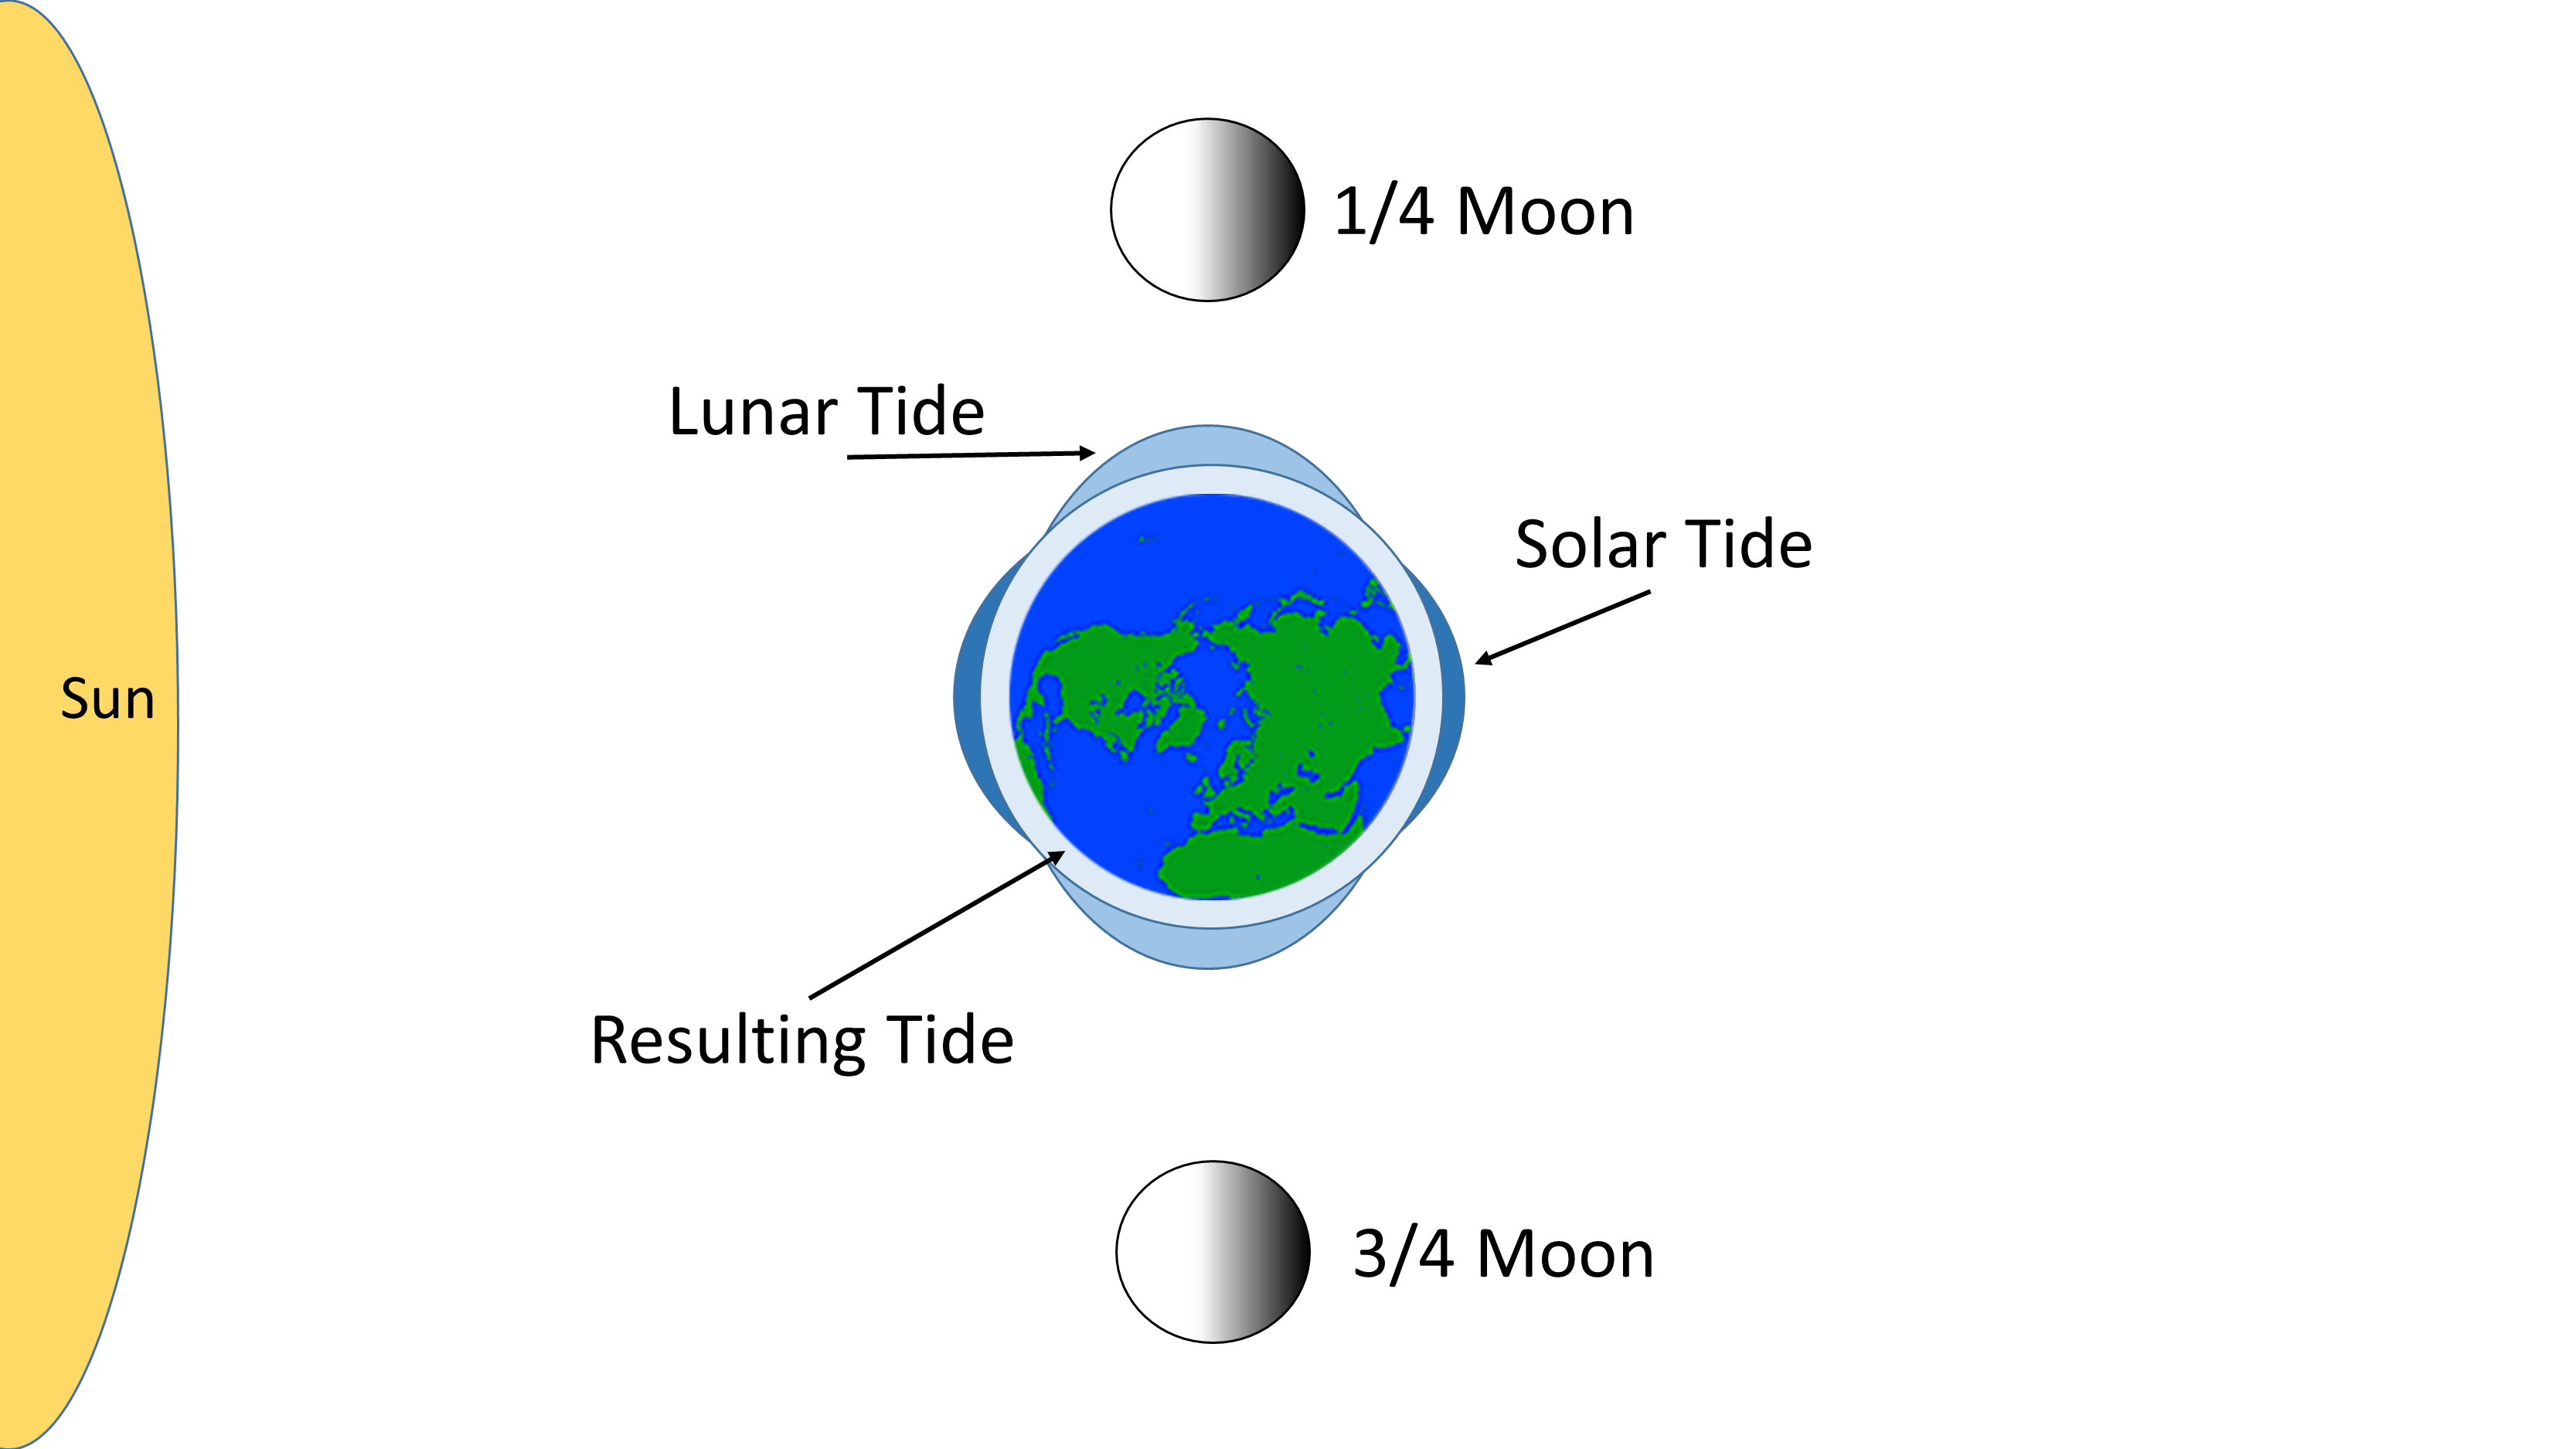 lunar tides are larger than solar tides